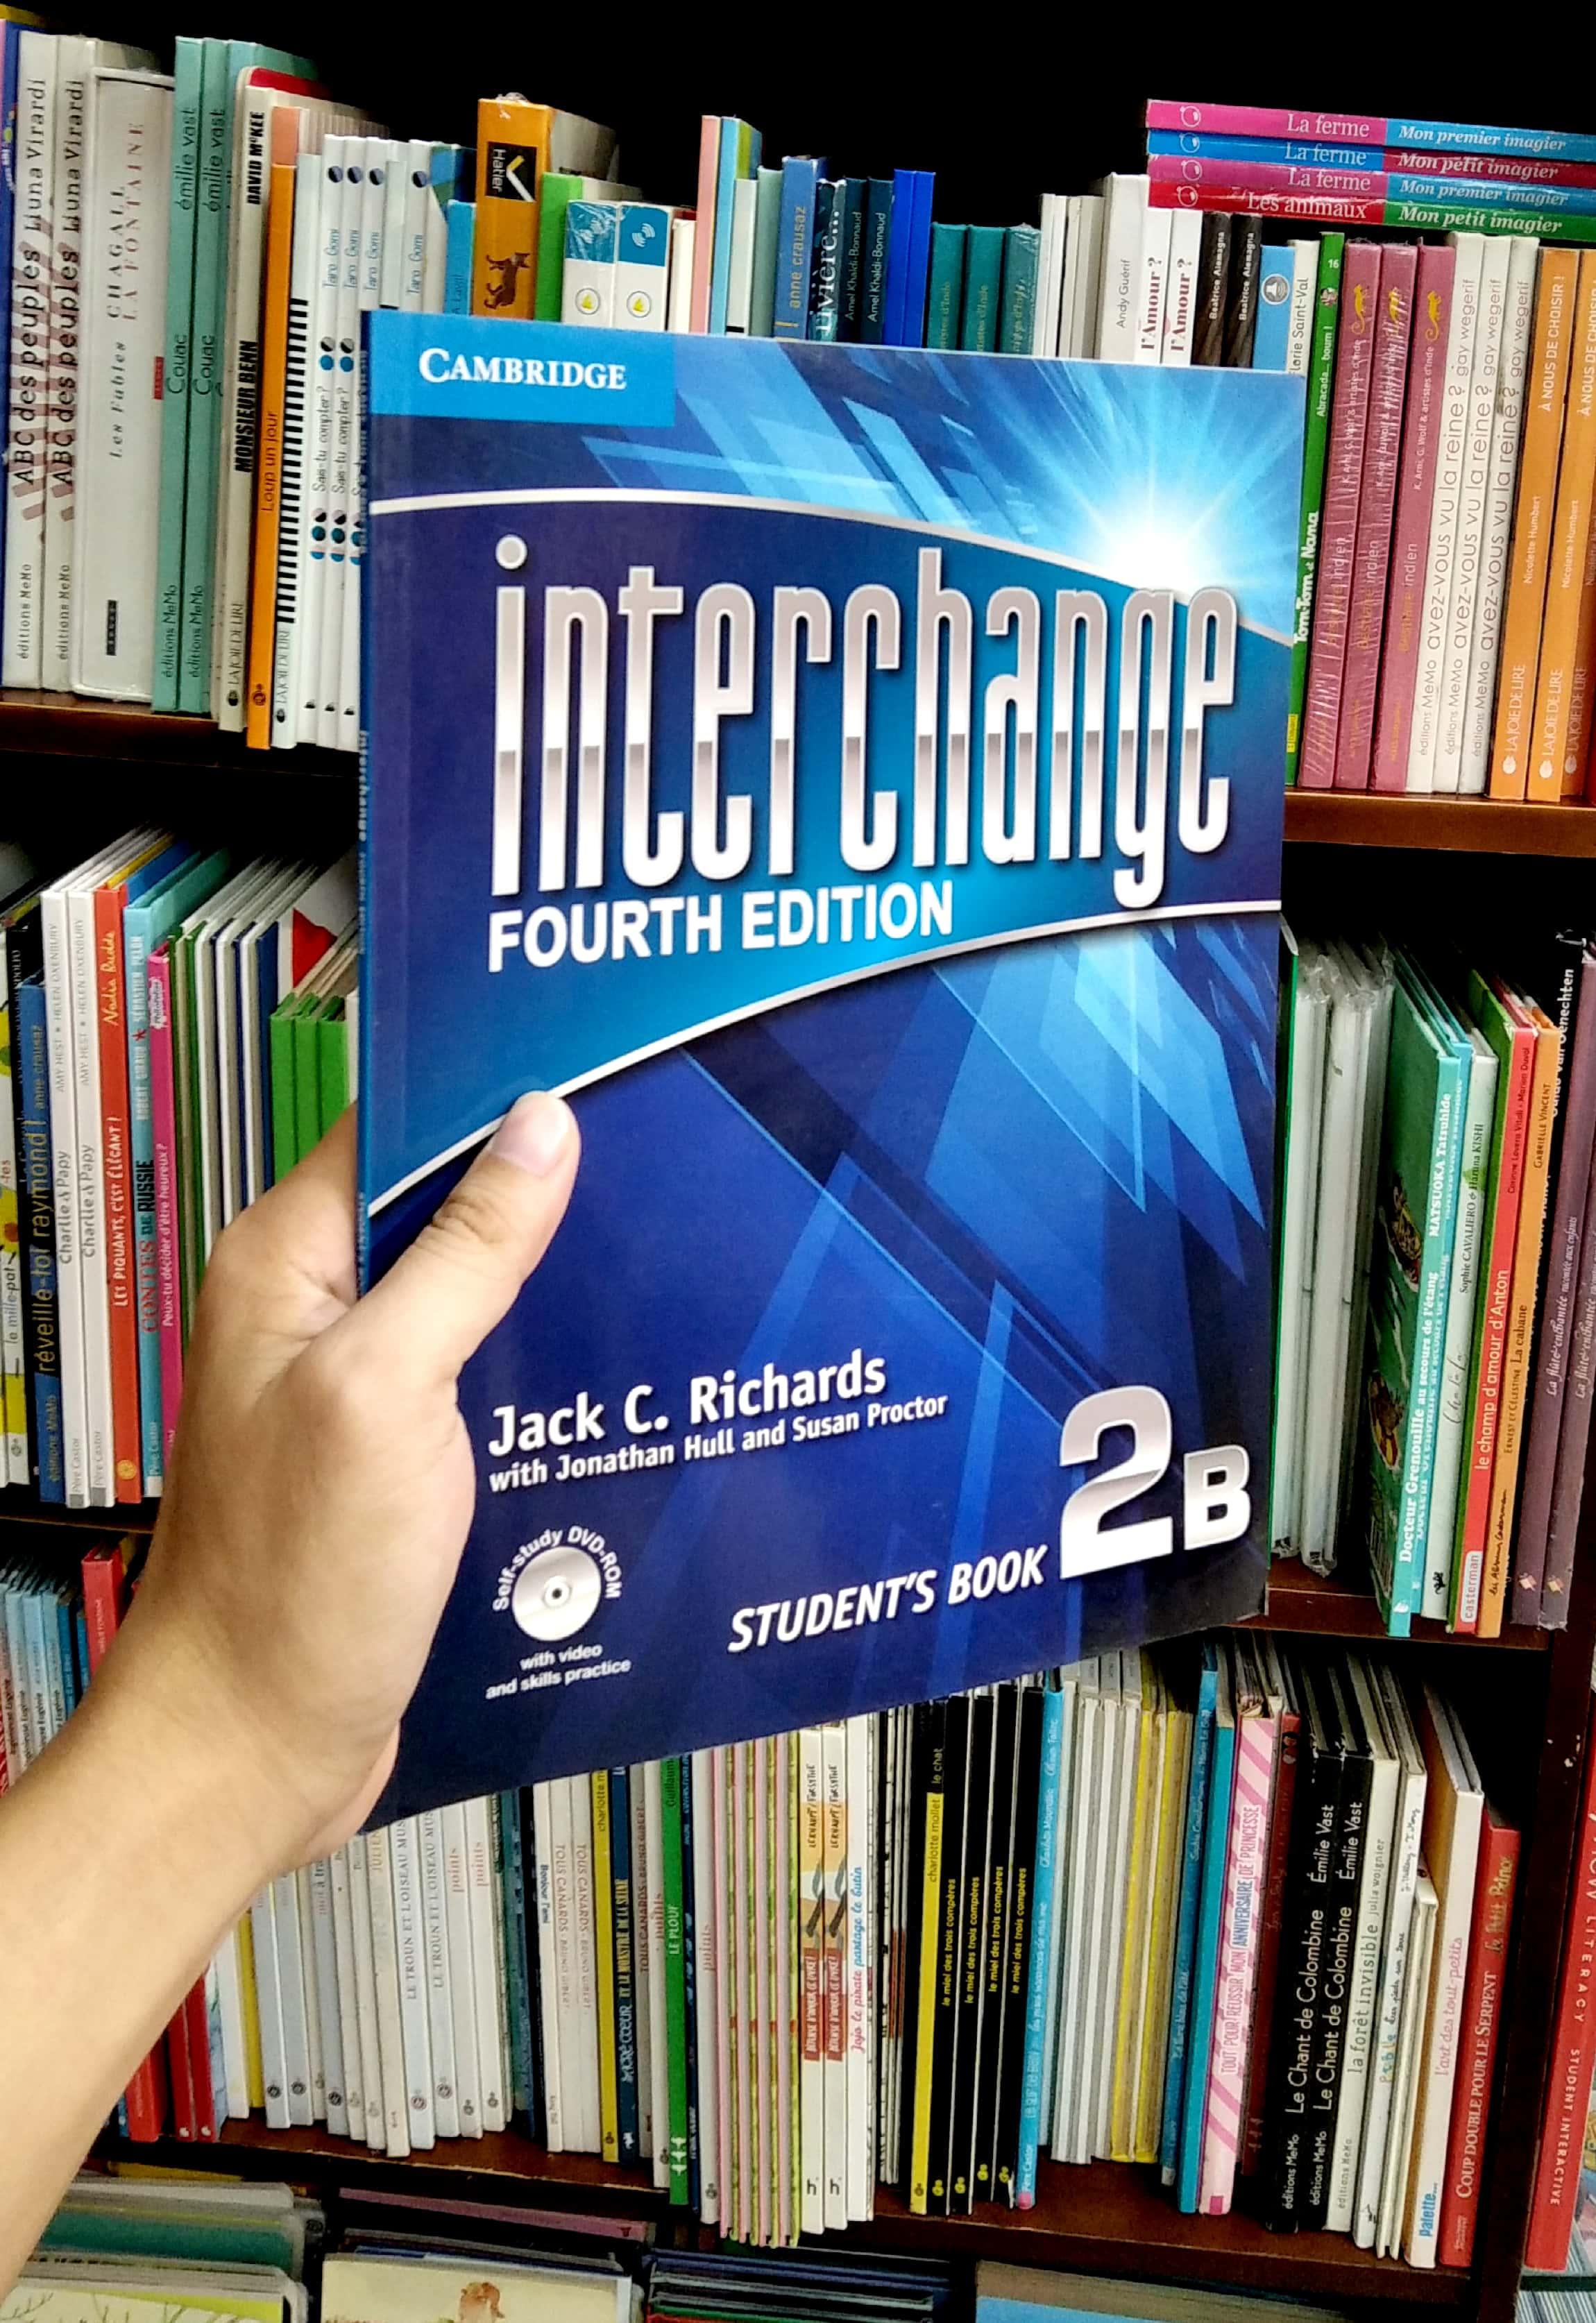 Interchange Level 2 Student's Book B with Self-study DVD-ROM